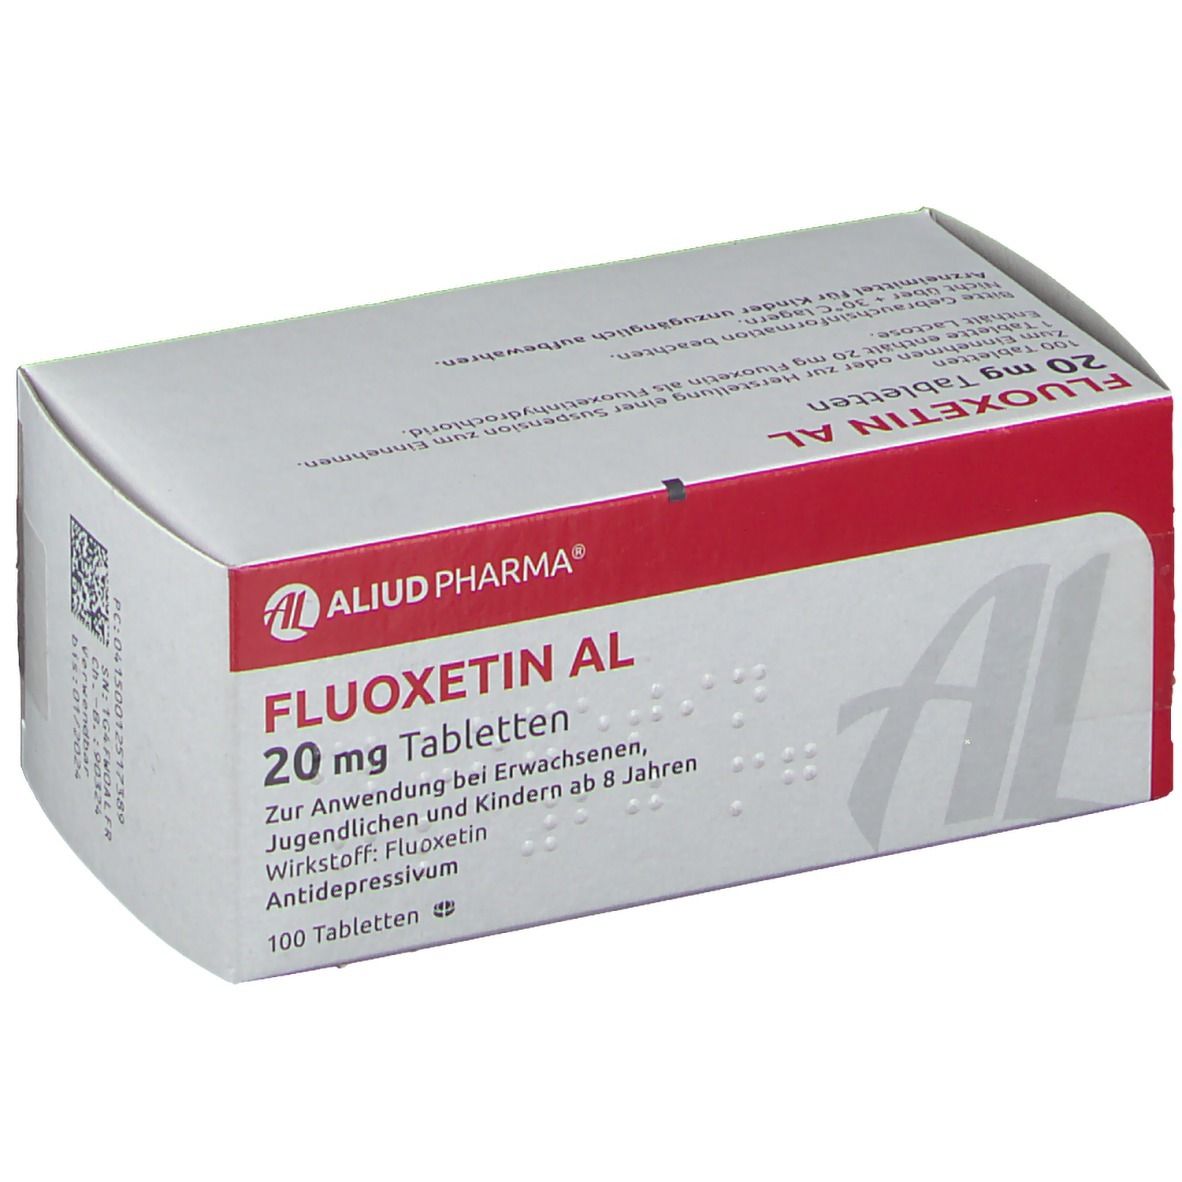 Fluoxetin AL 20 mg